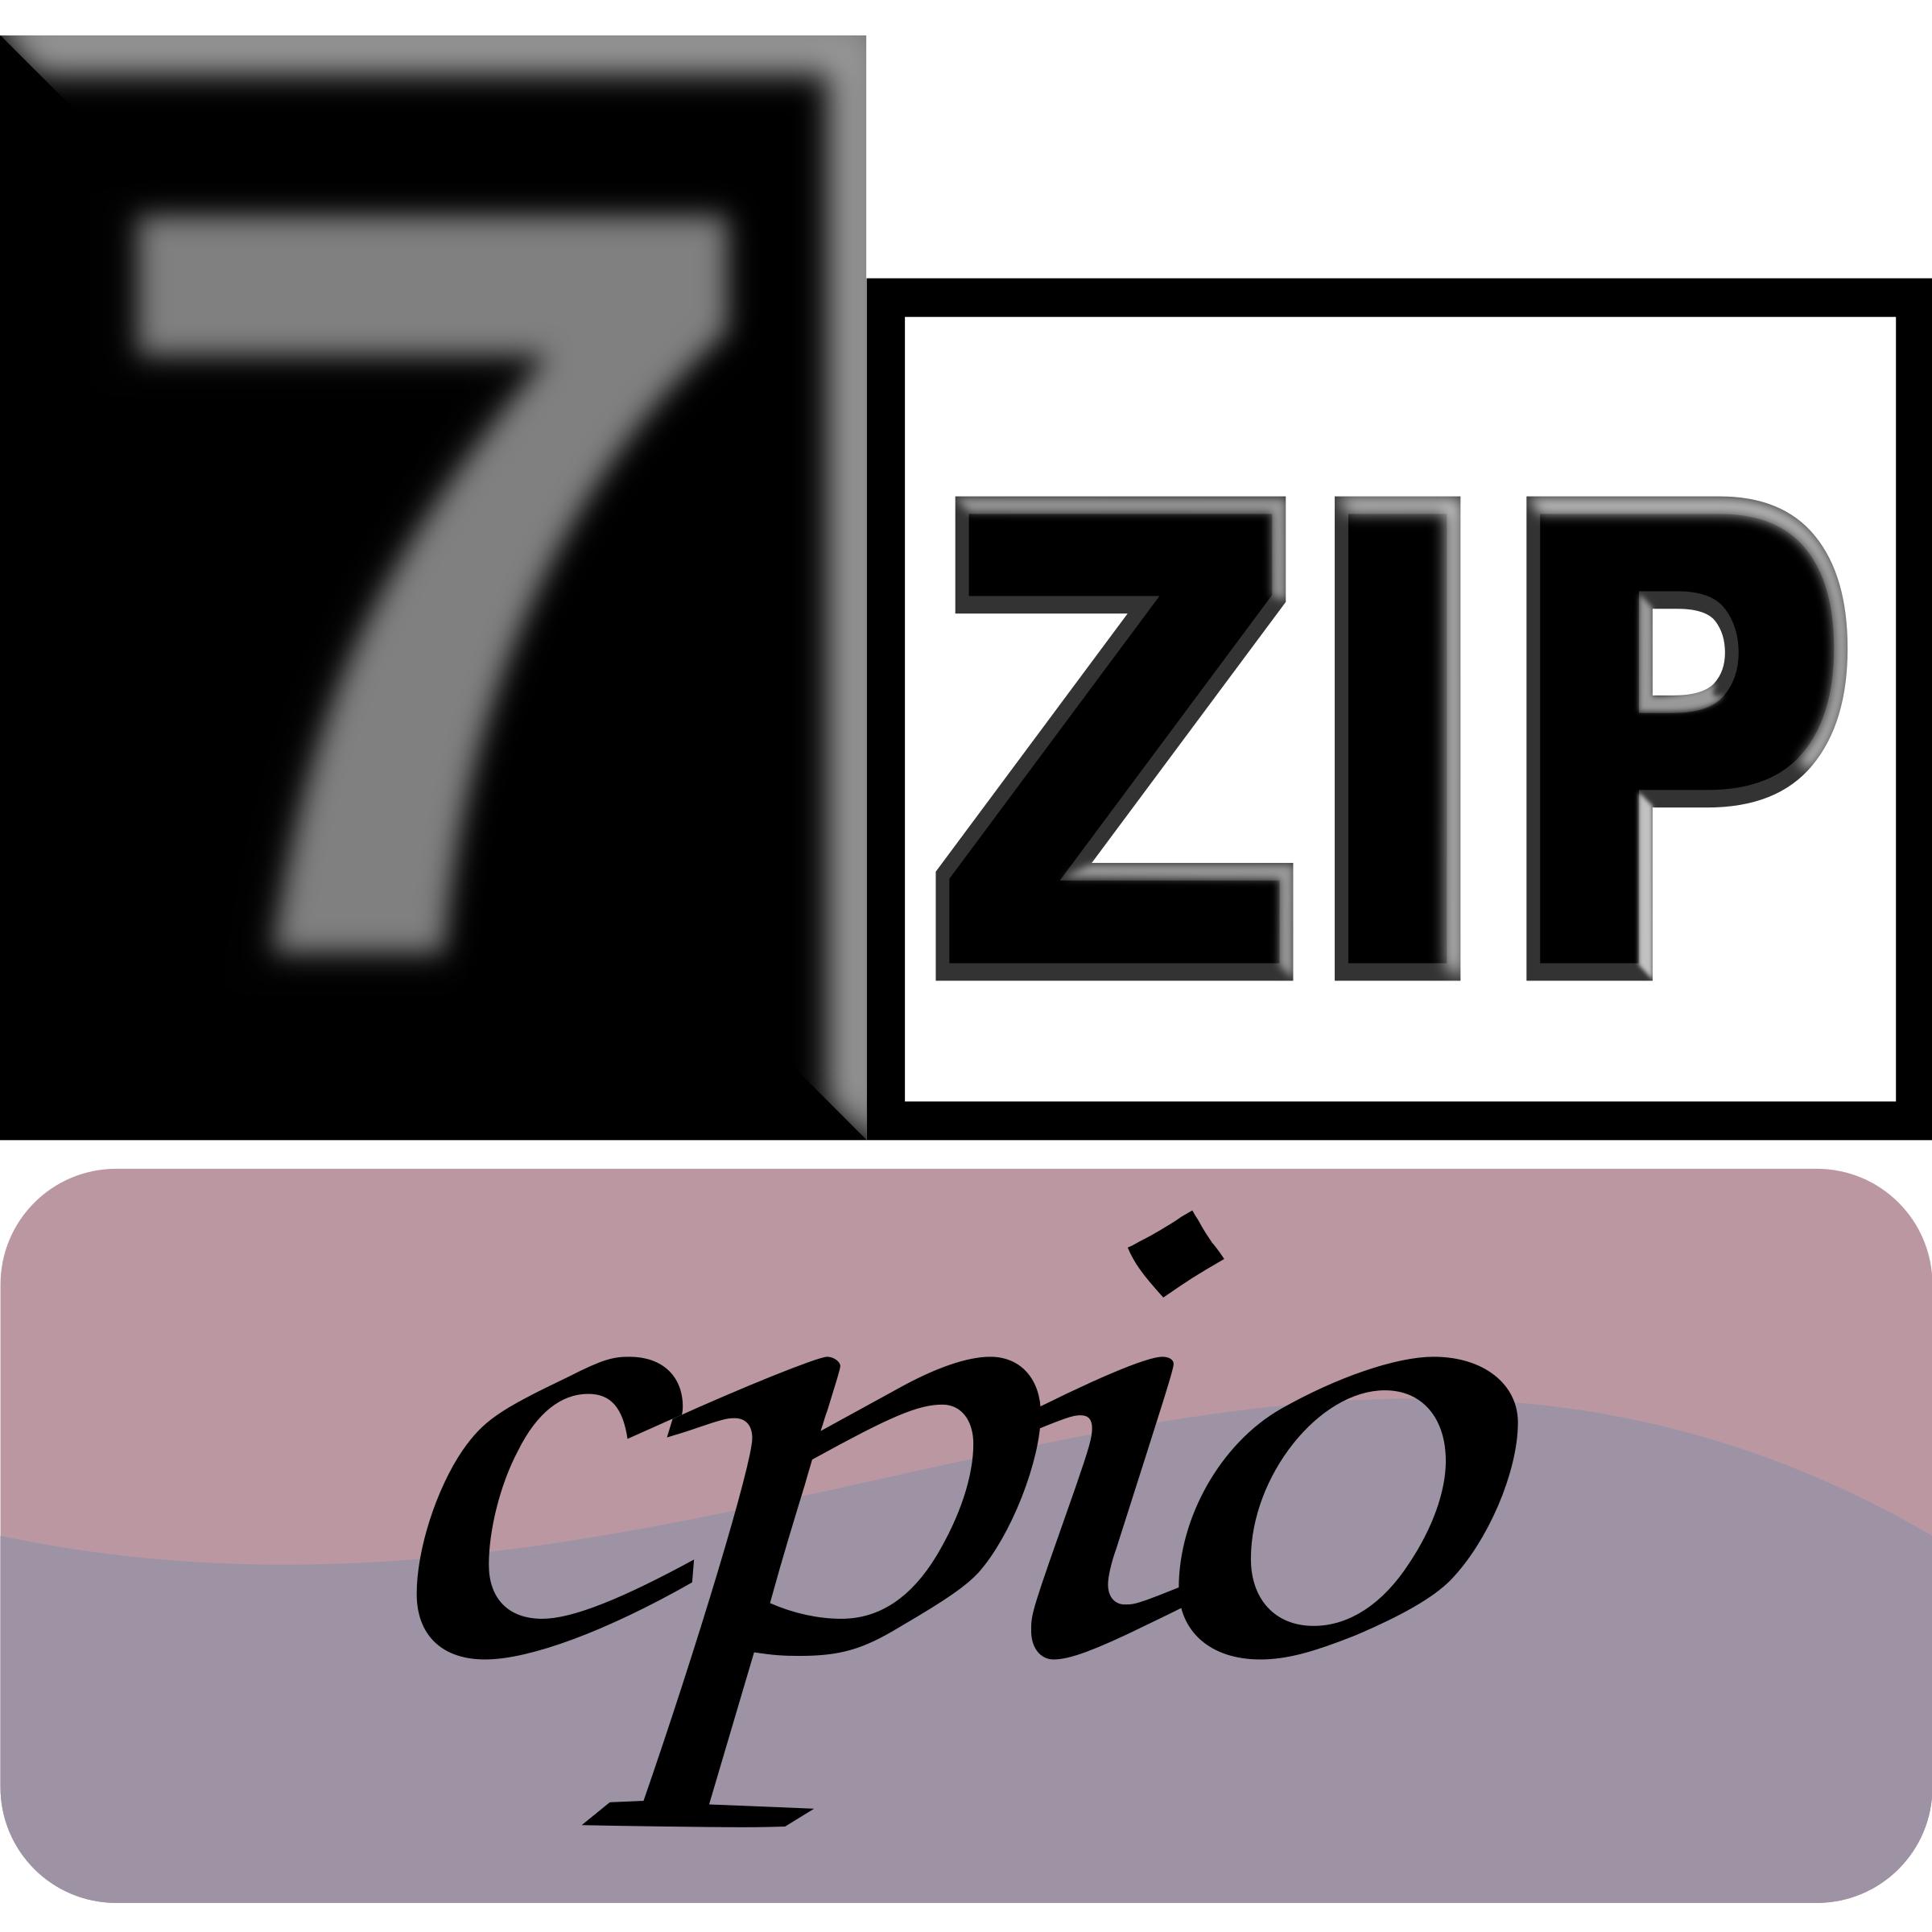 7zipClassic-cpio png